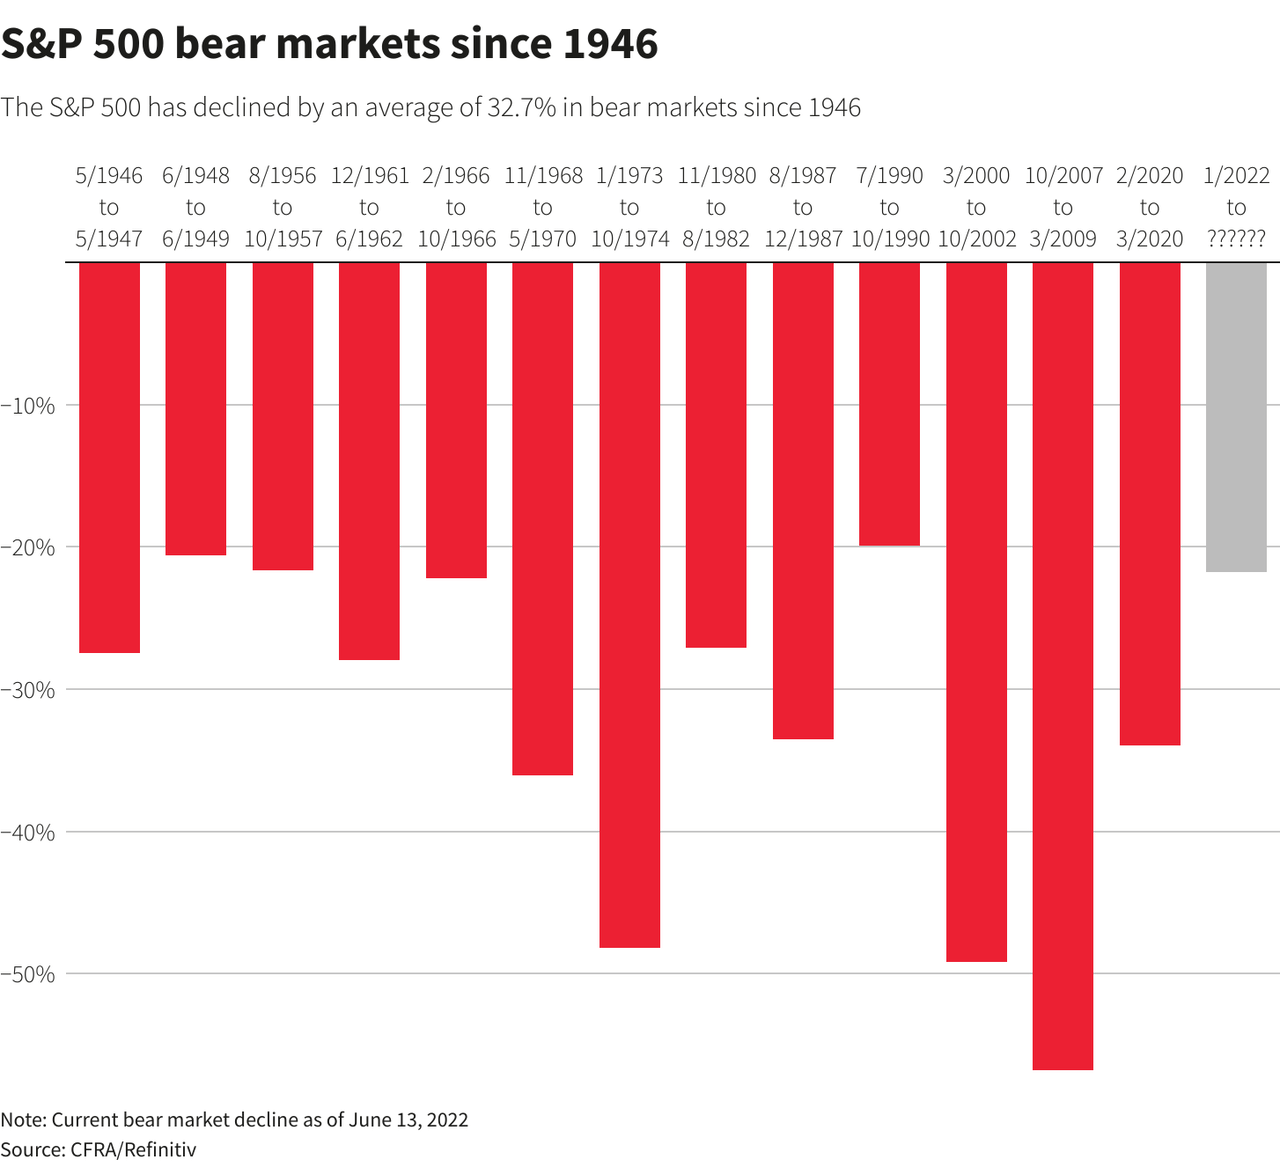 S&P 500 Bear Markets Since 1946